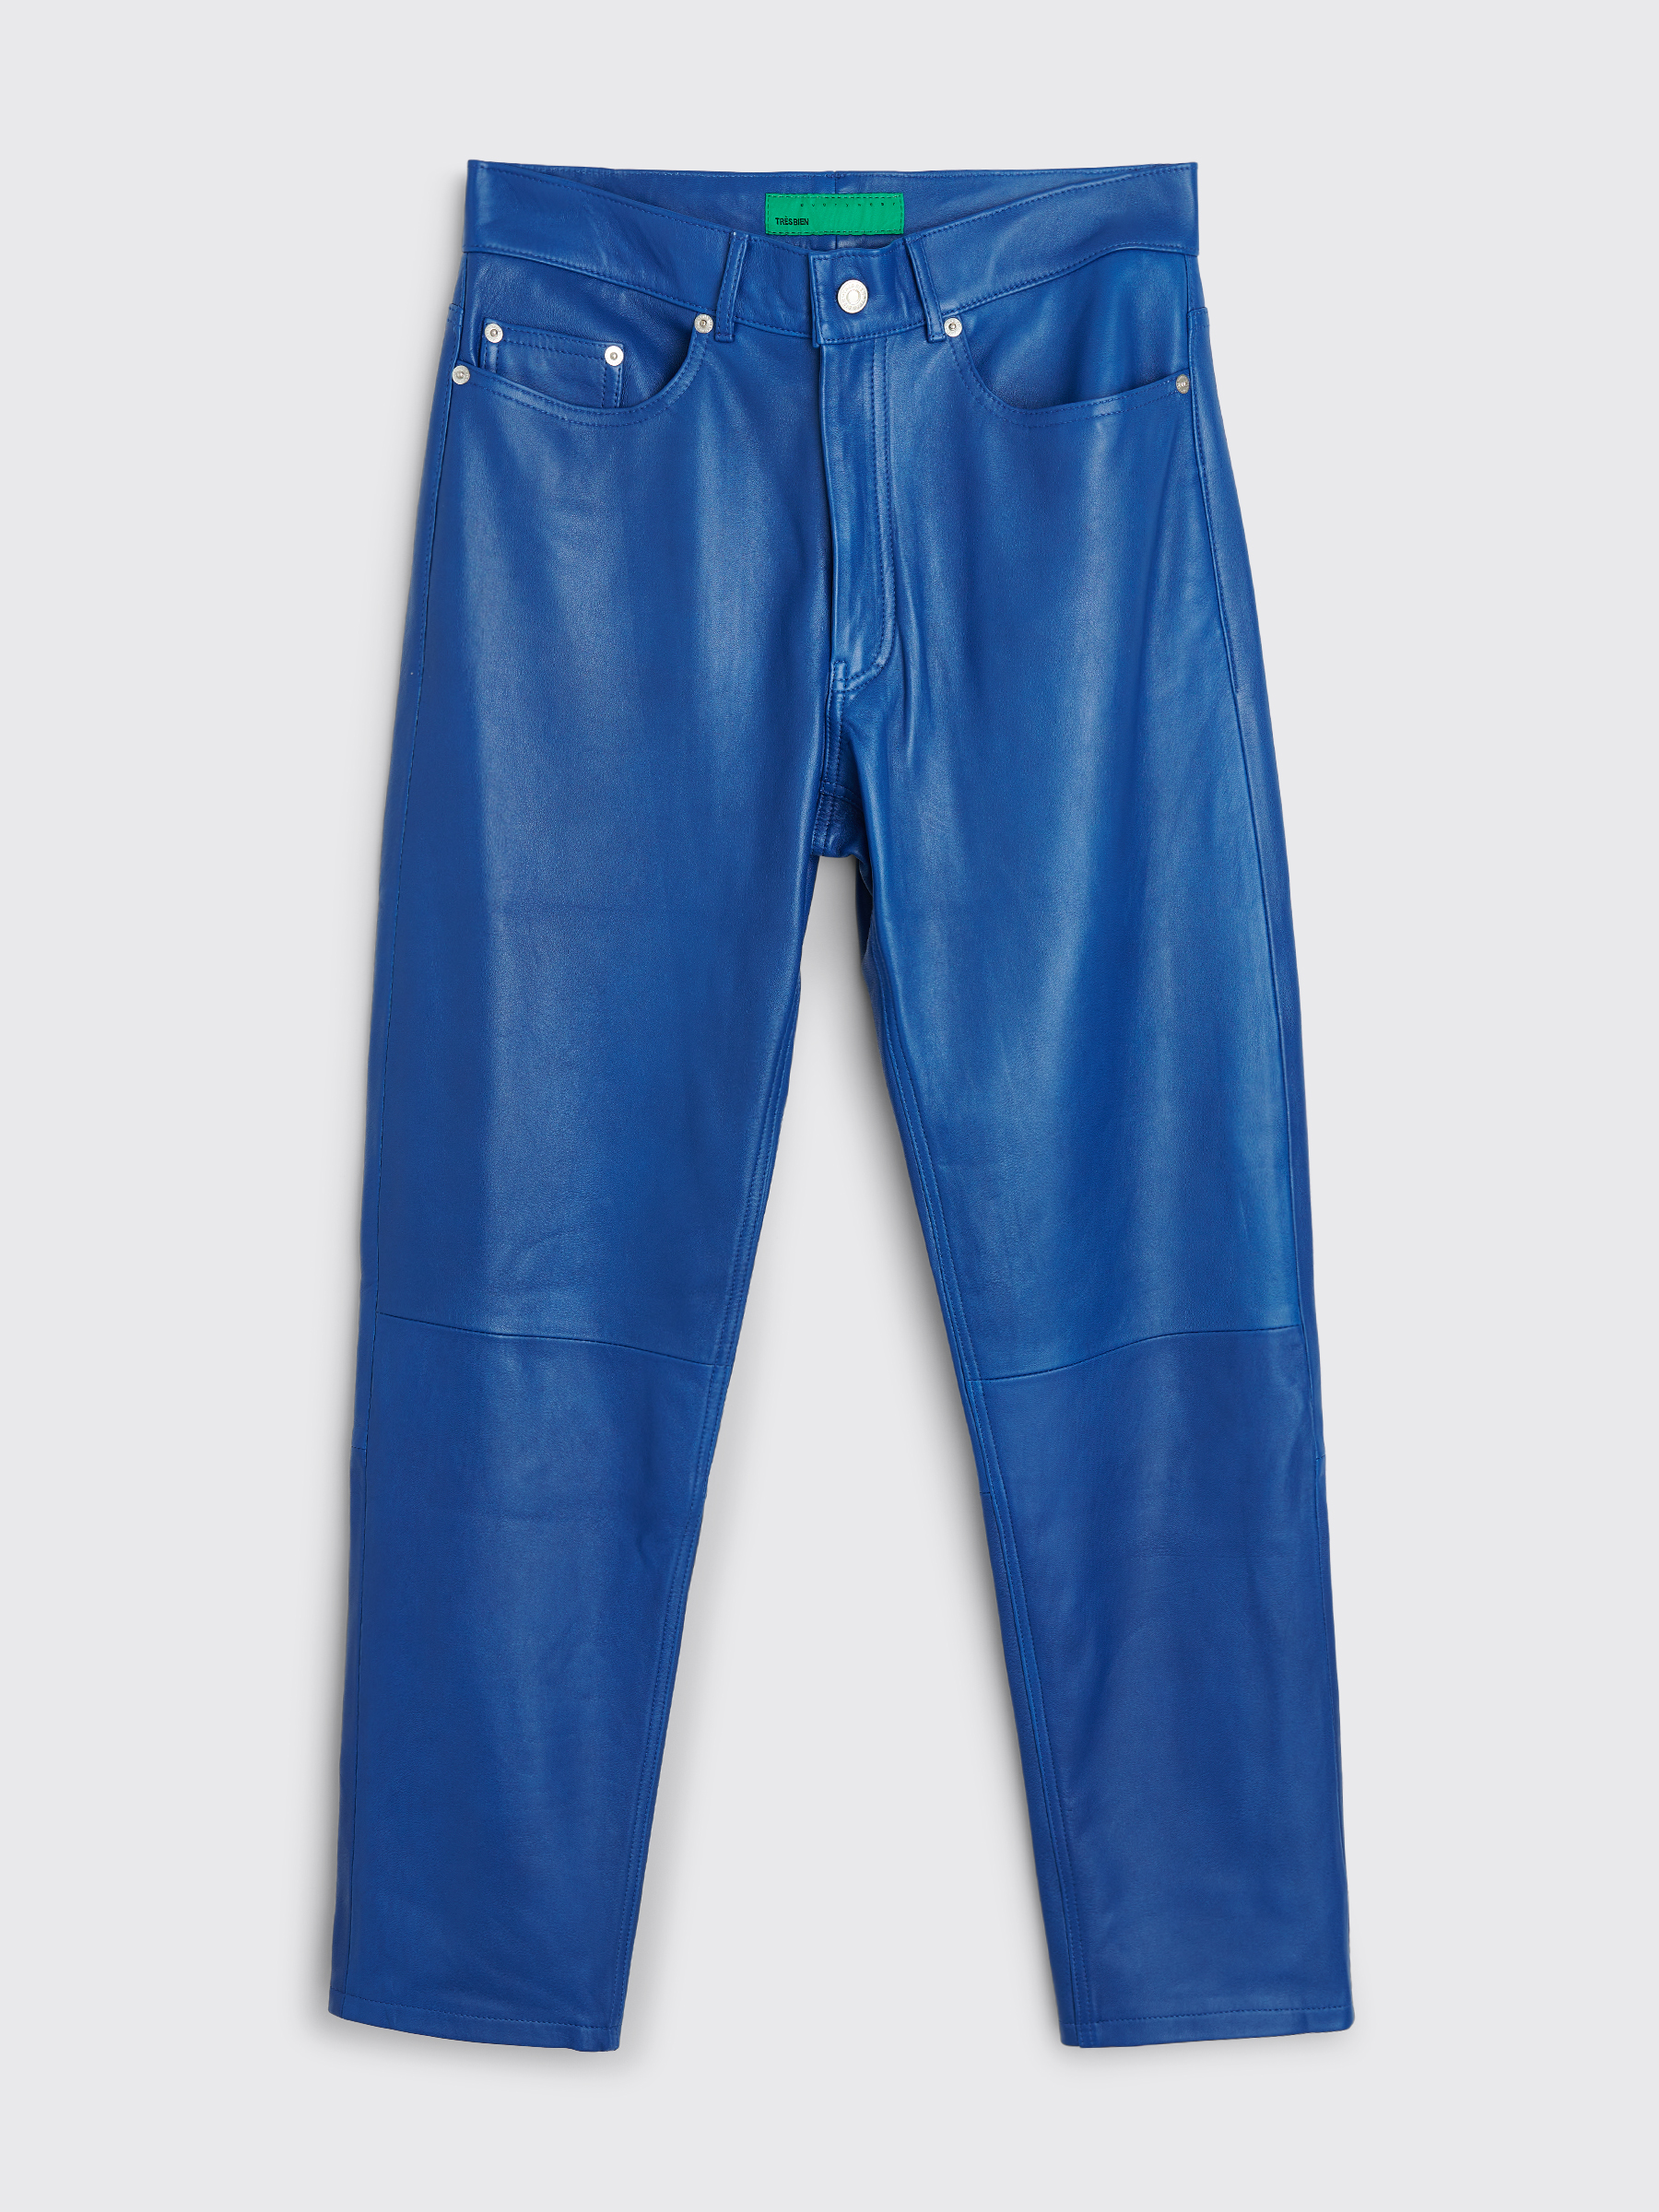 Manfinity EMRG Men's Fashionable Skinny Pu Leather Pants | SHEIN USA